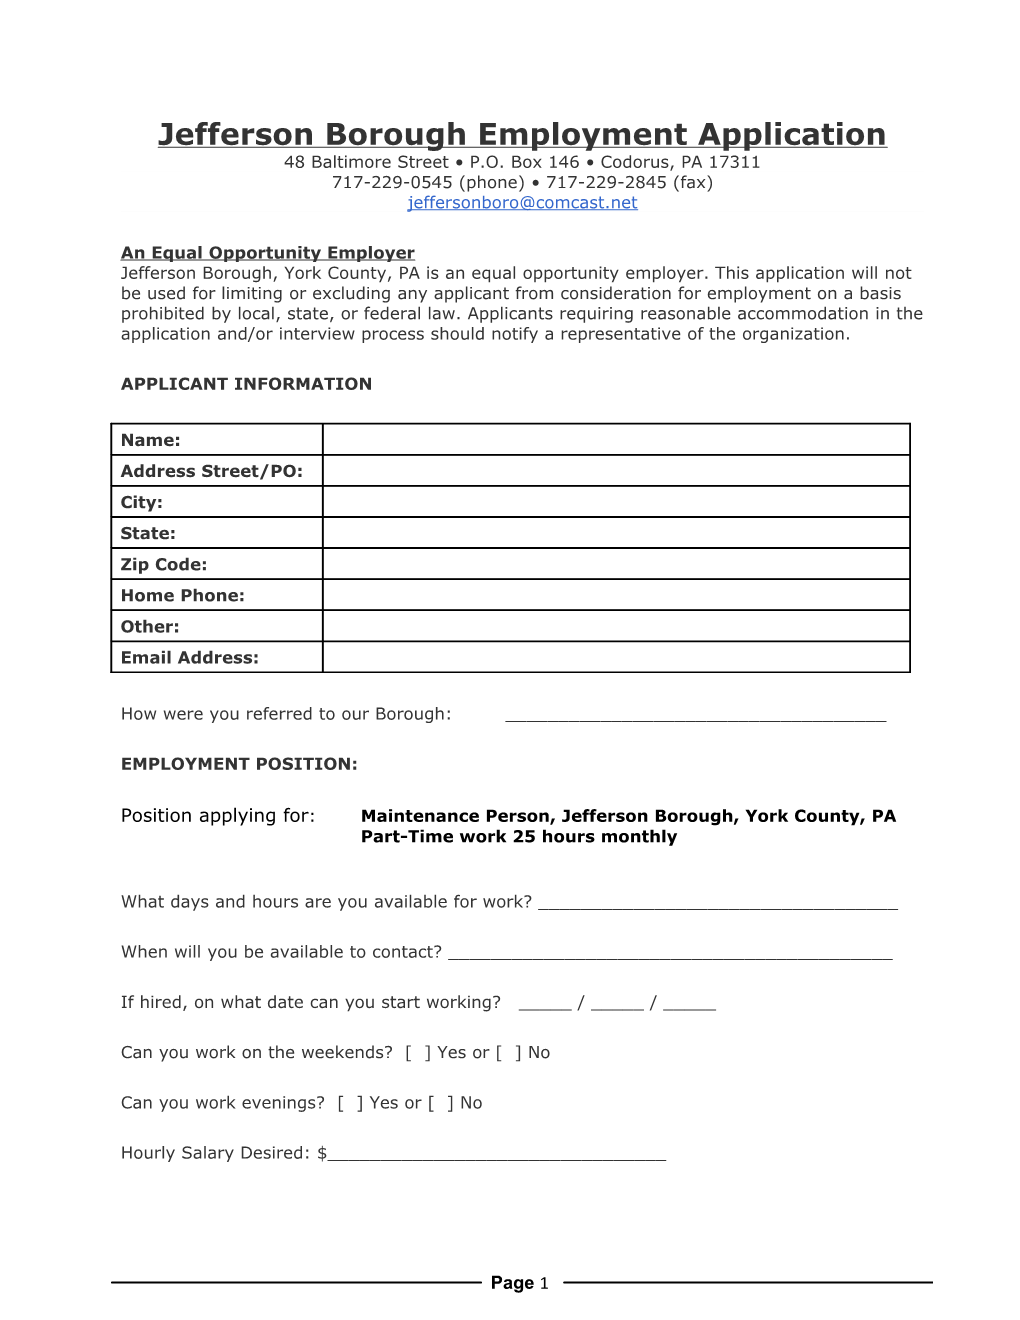 Jefferson Borough Employment Application